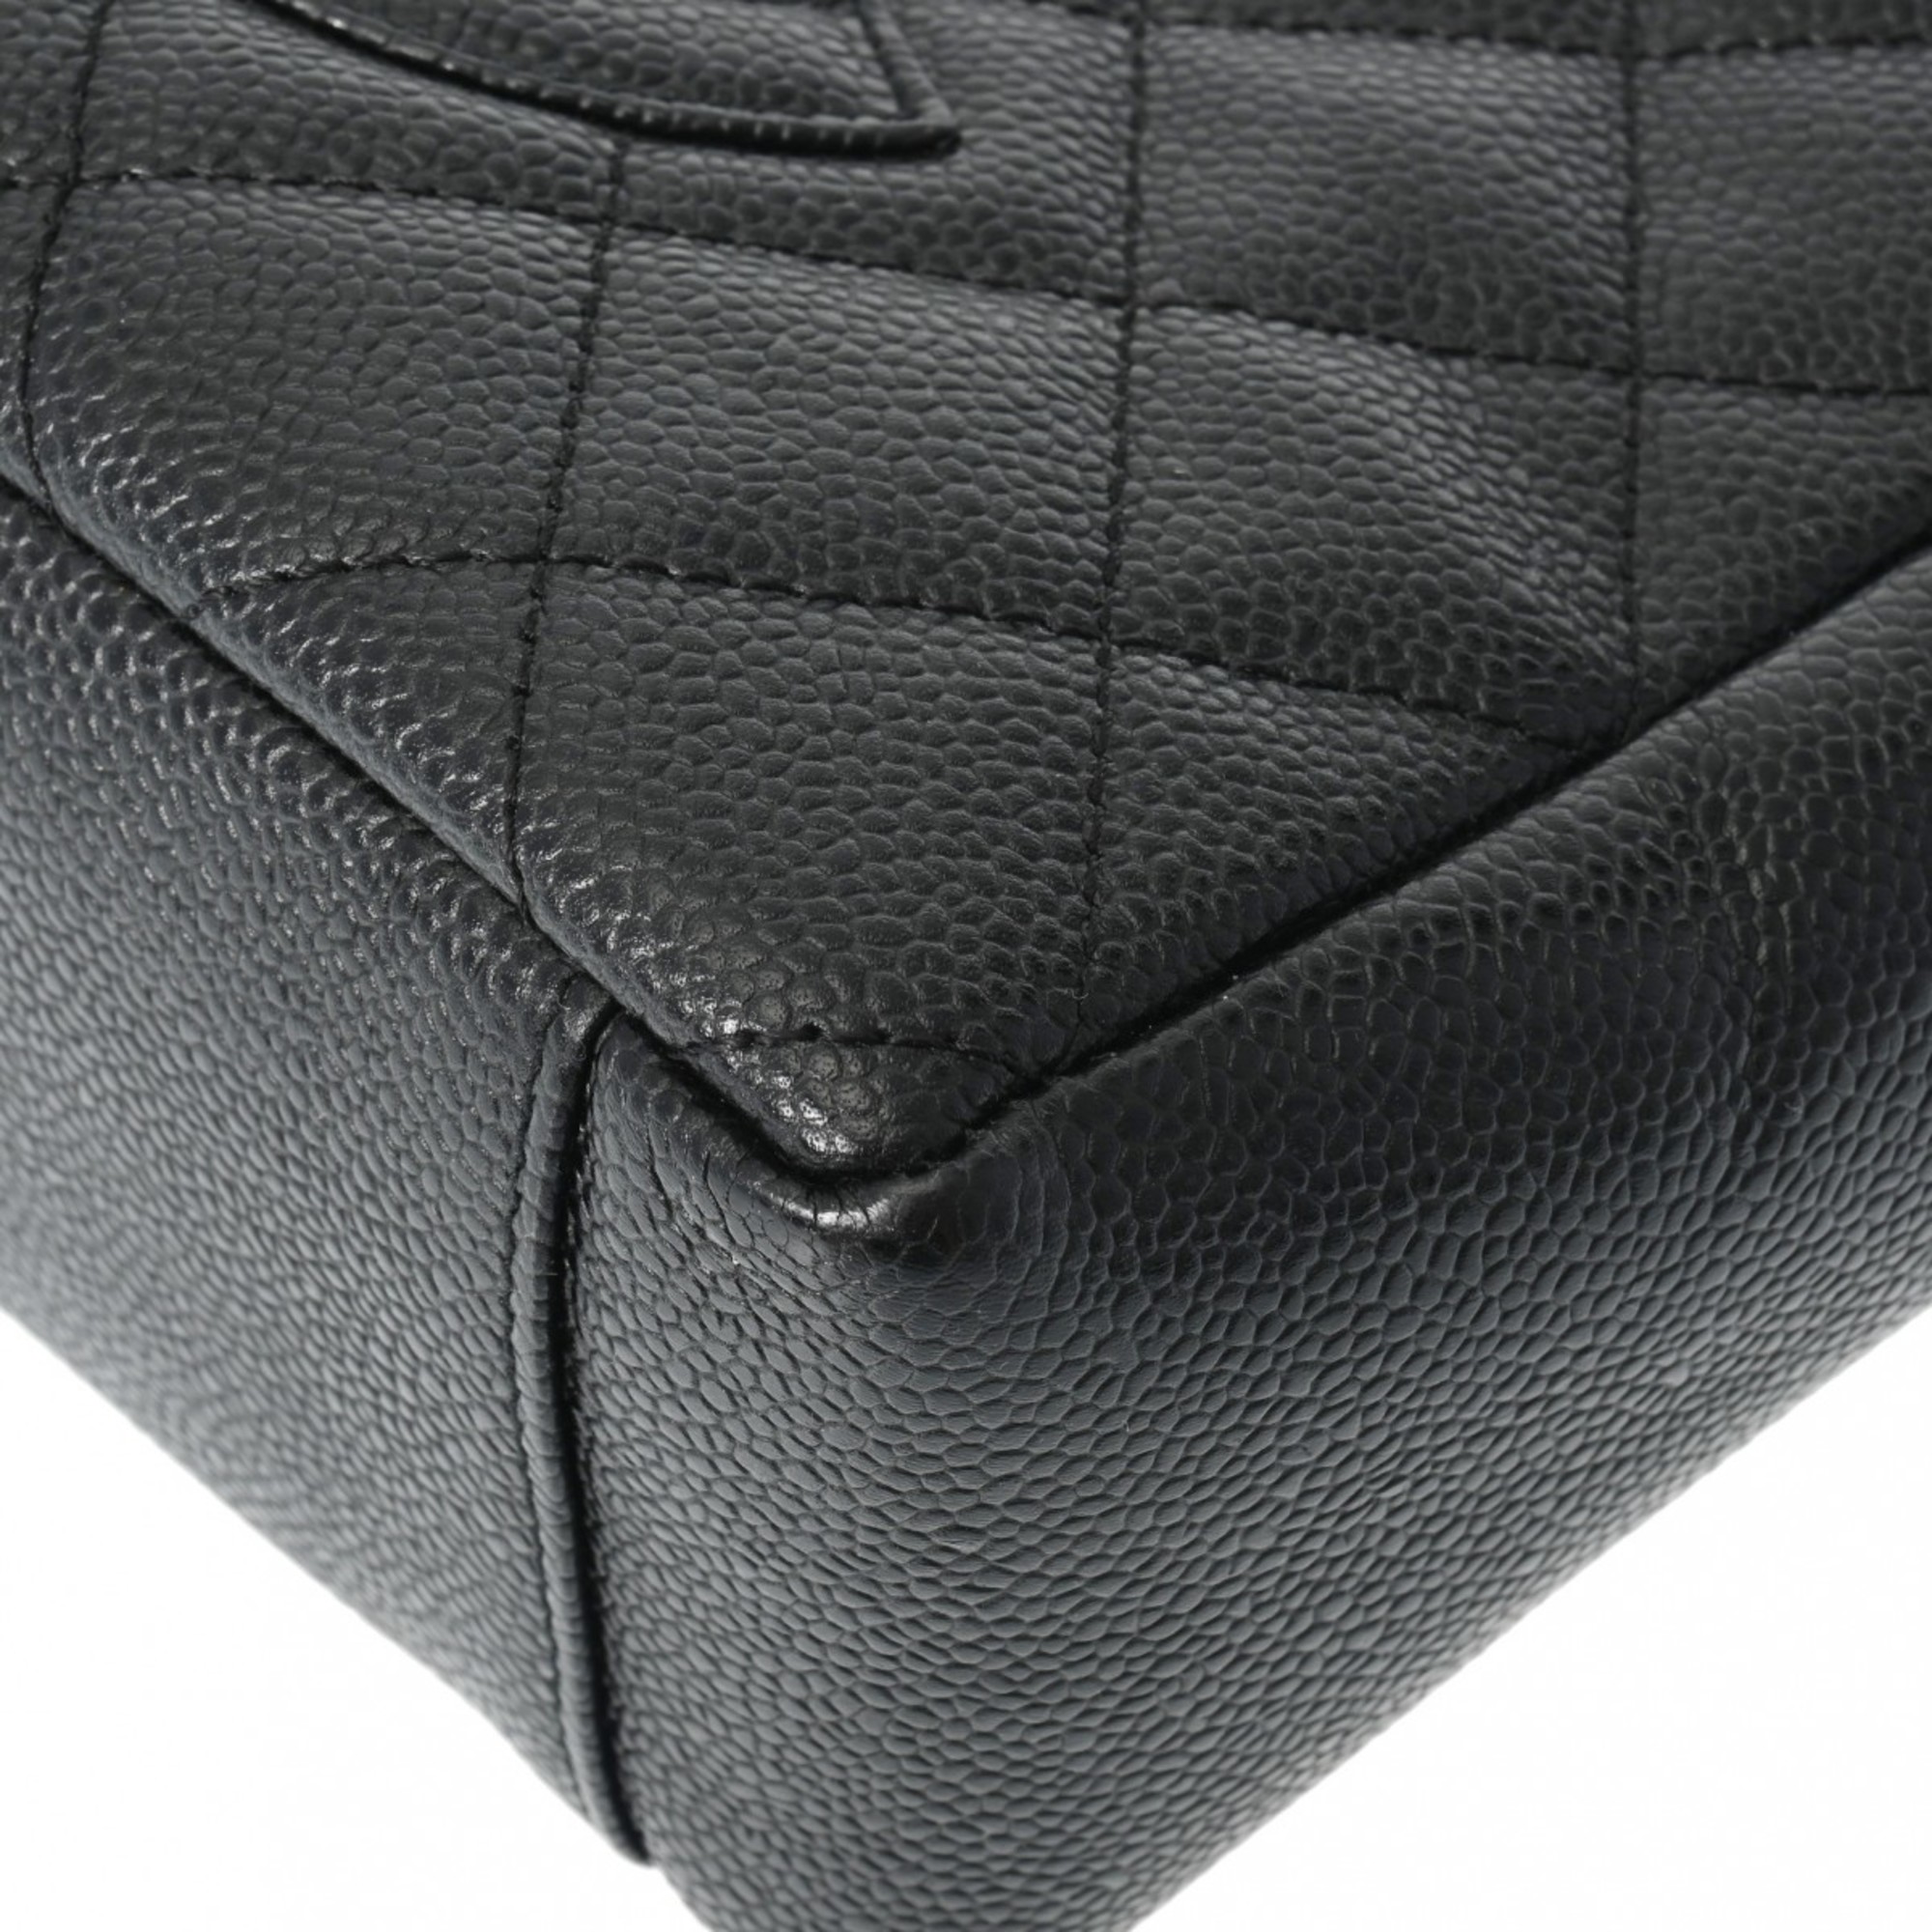 CHANEL Chanel Matelasse PST Tote Black A50994 Women's Caviar Skin Bag